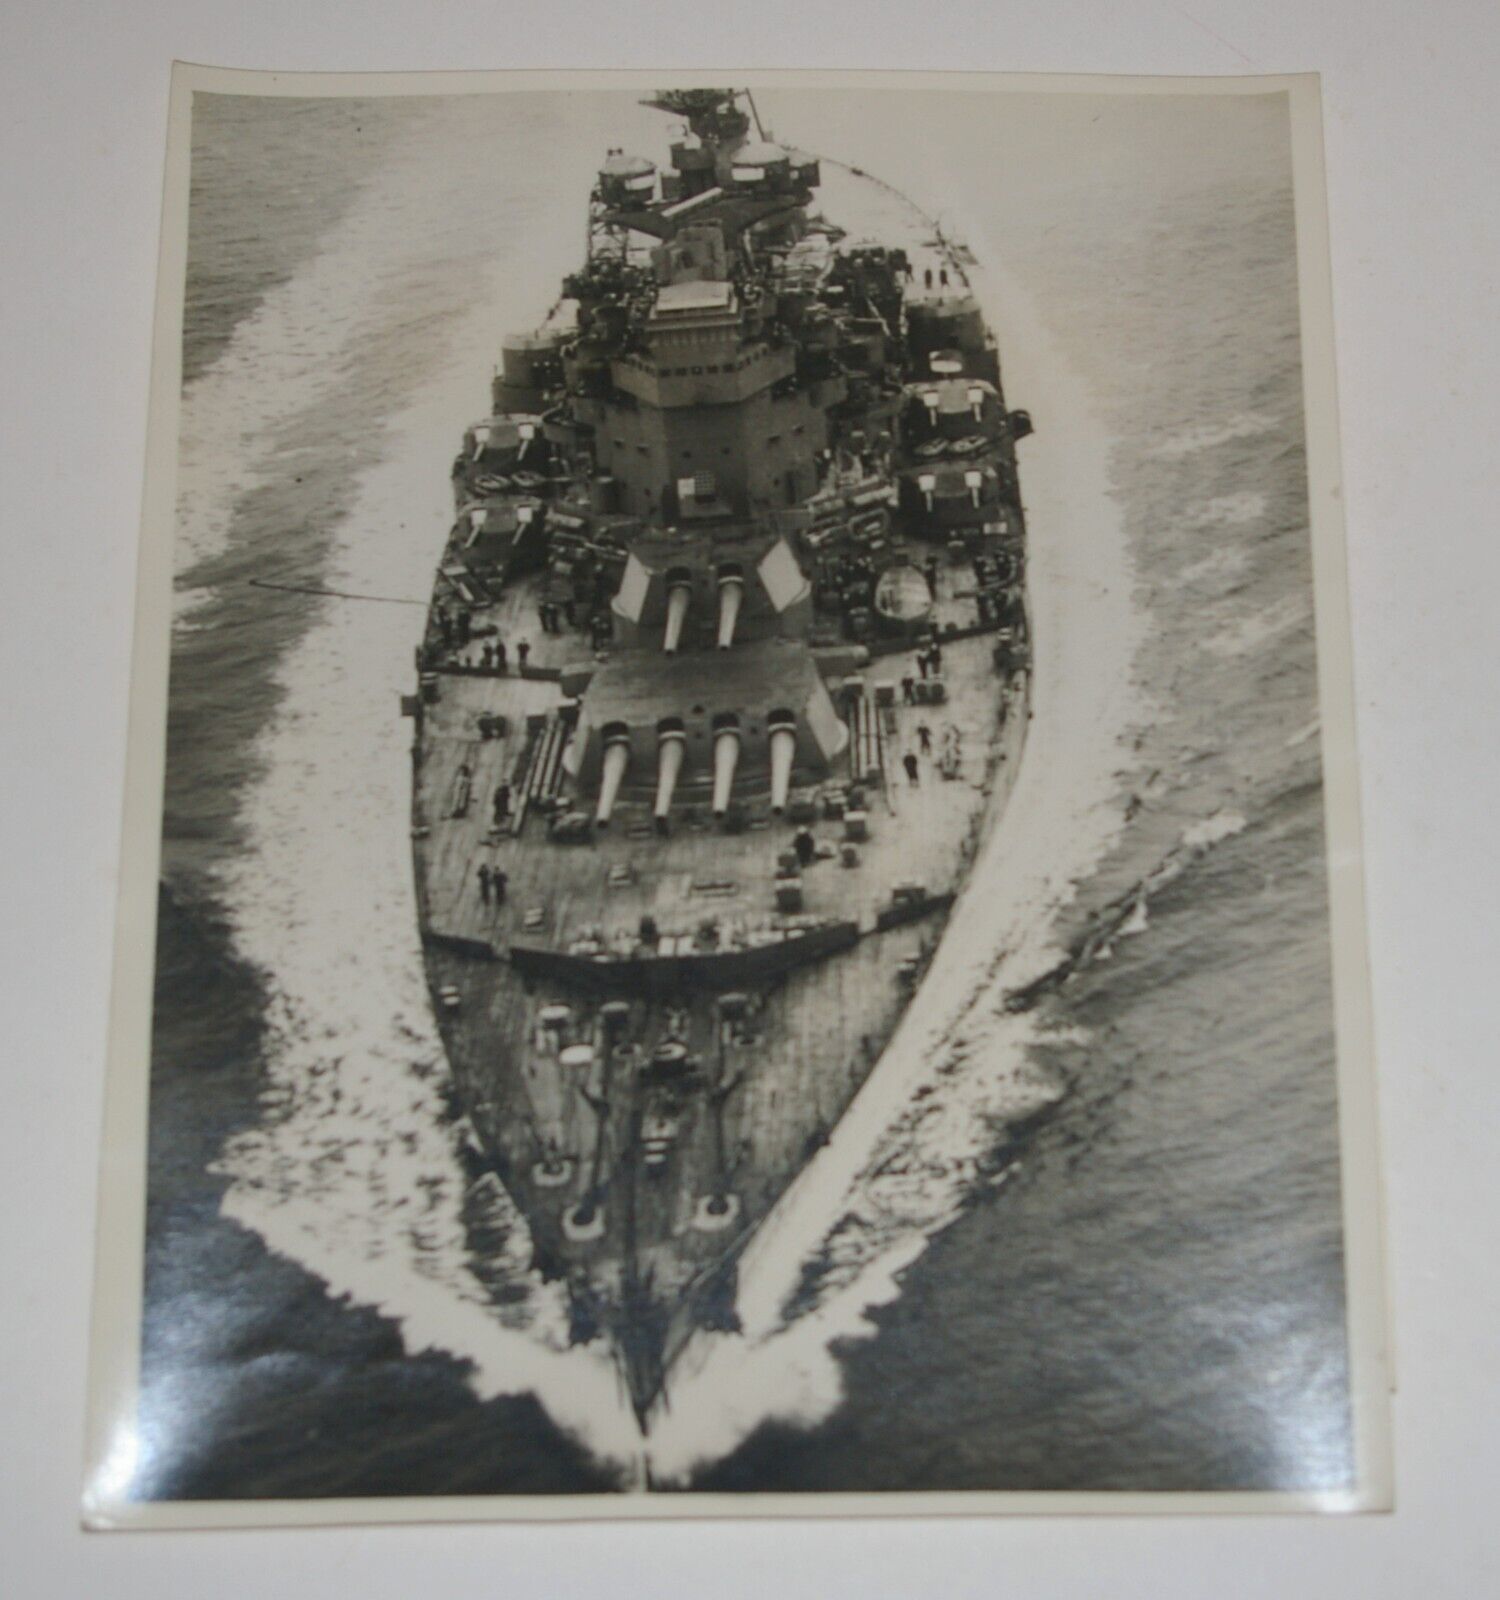 Bow View of Royal Navy HMS KING GEORGE V Battleship Associated Press Photograph